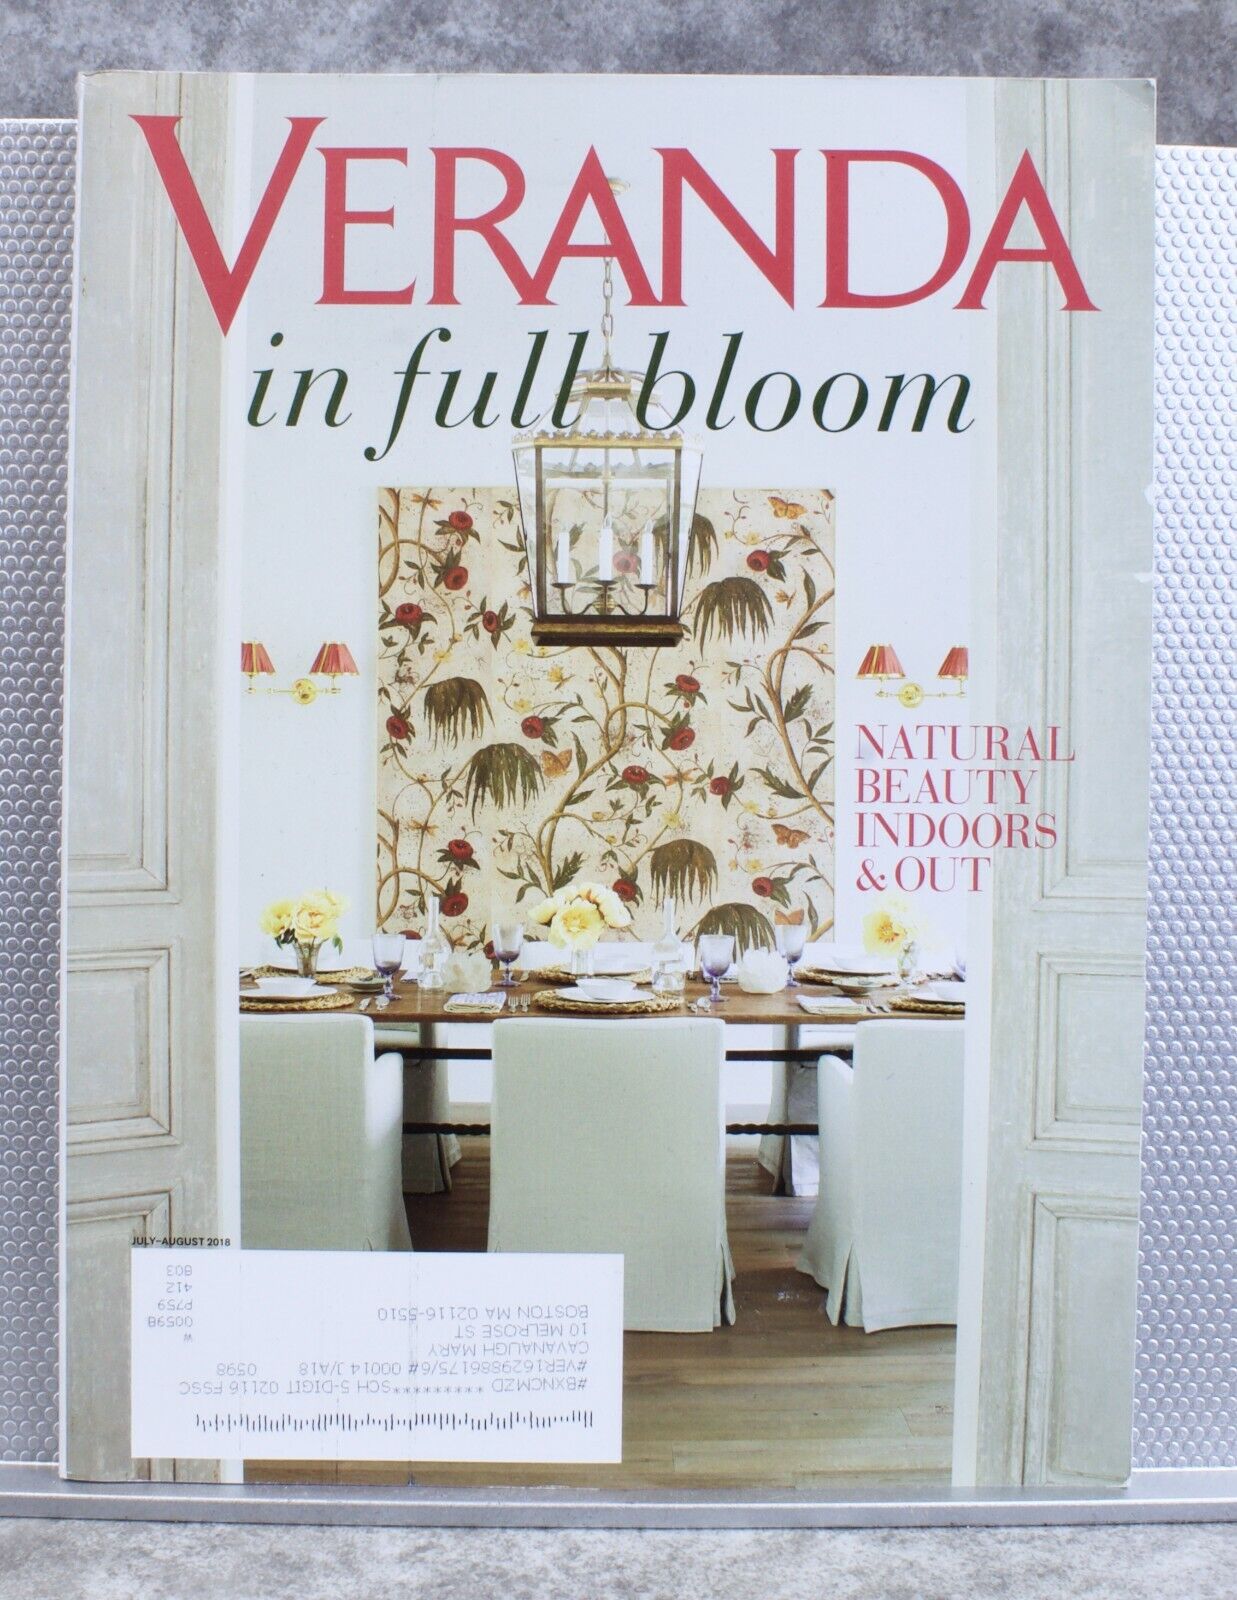 Veranda Magazine July August 2018 In Full Bloom